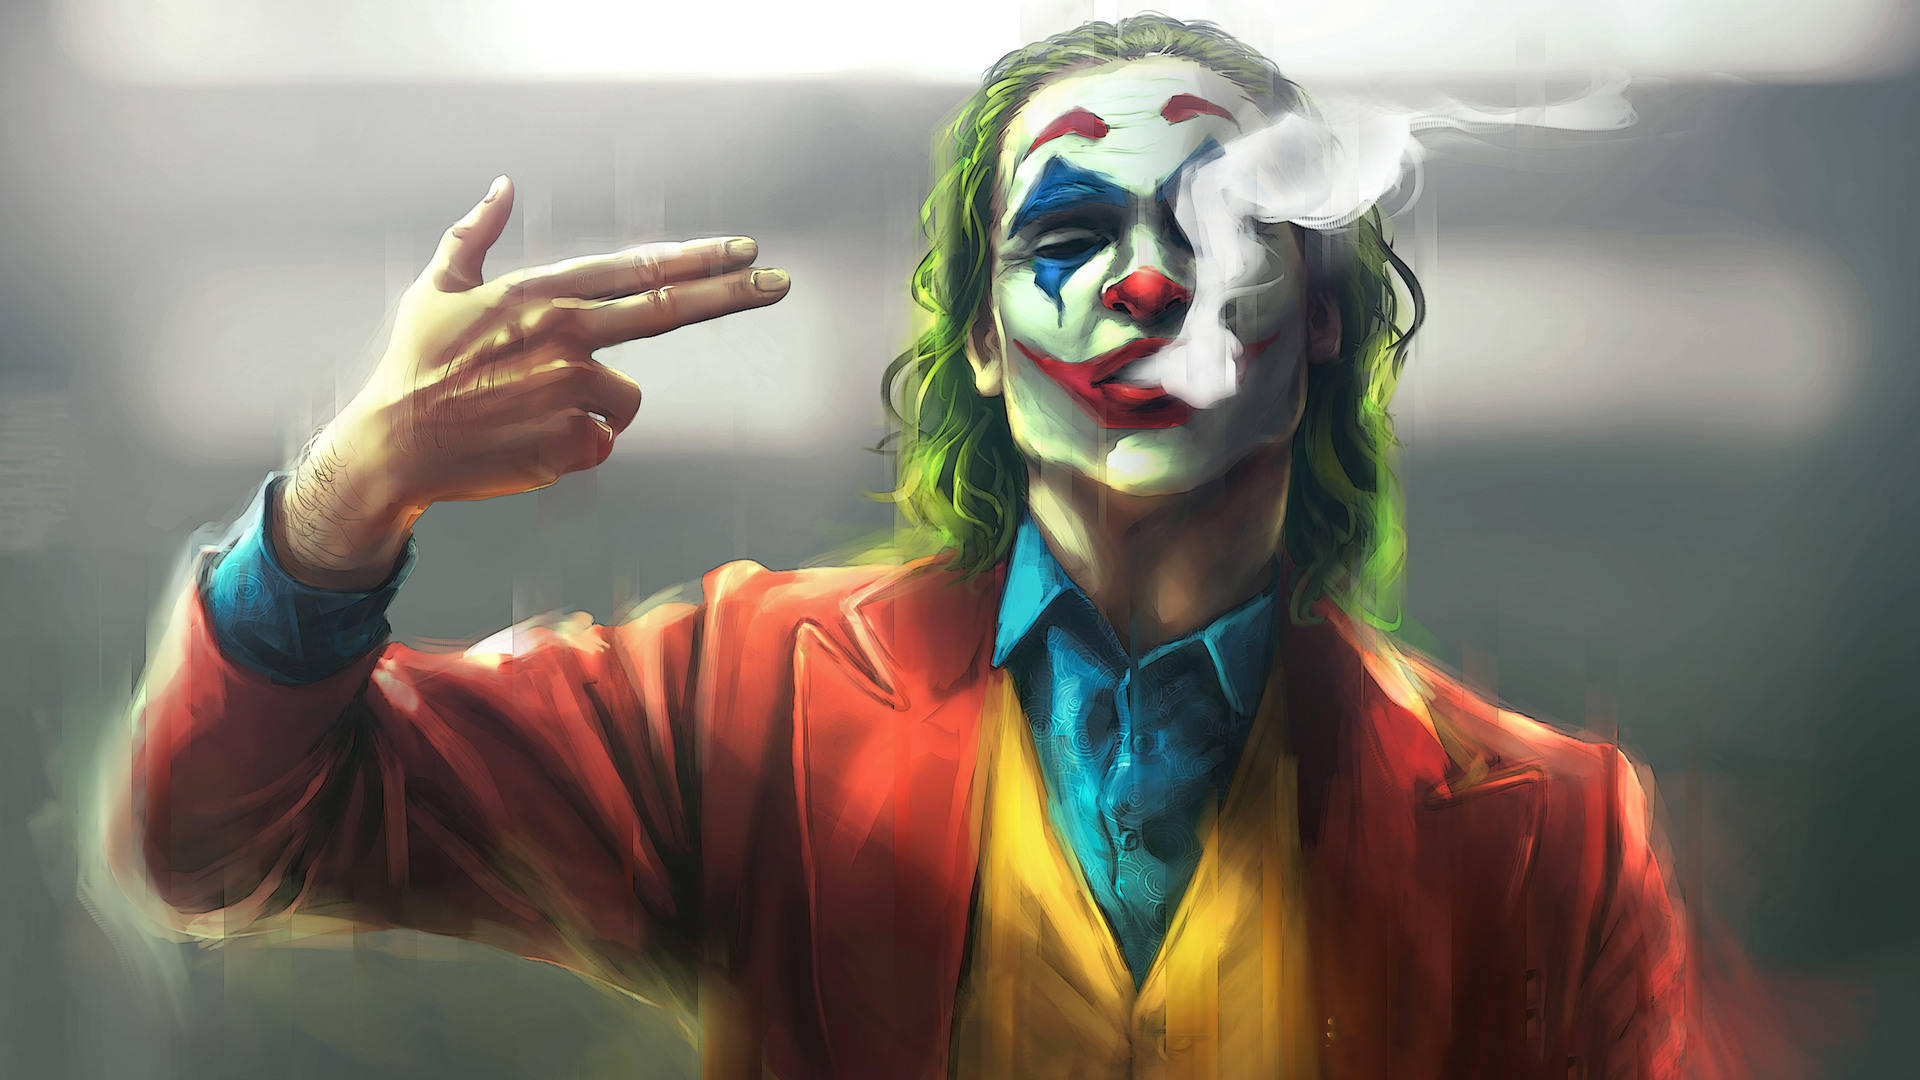 Cool Picture Joker Art Background